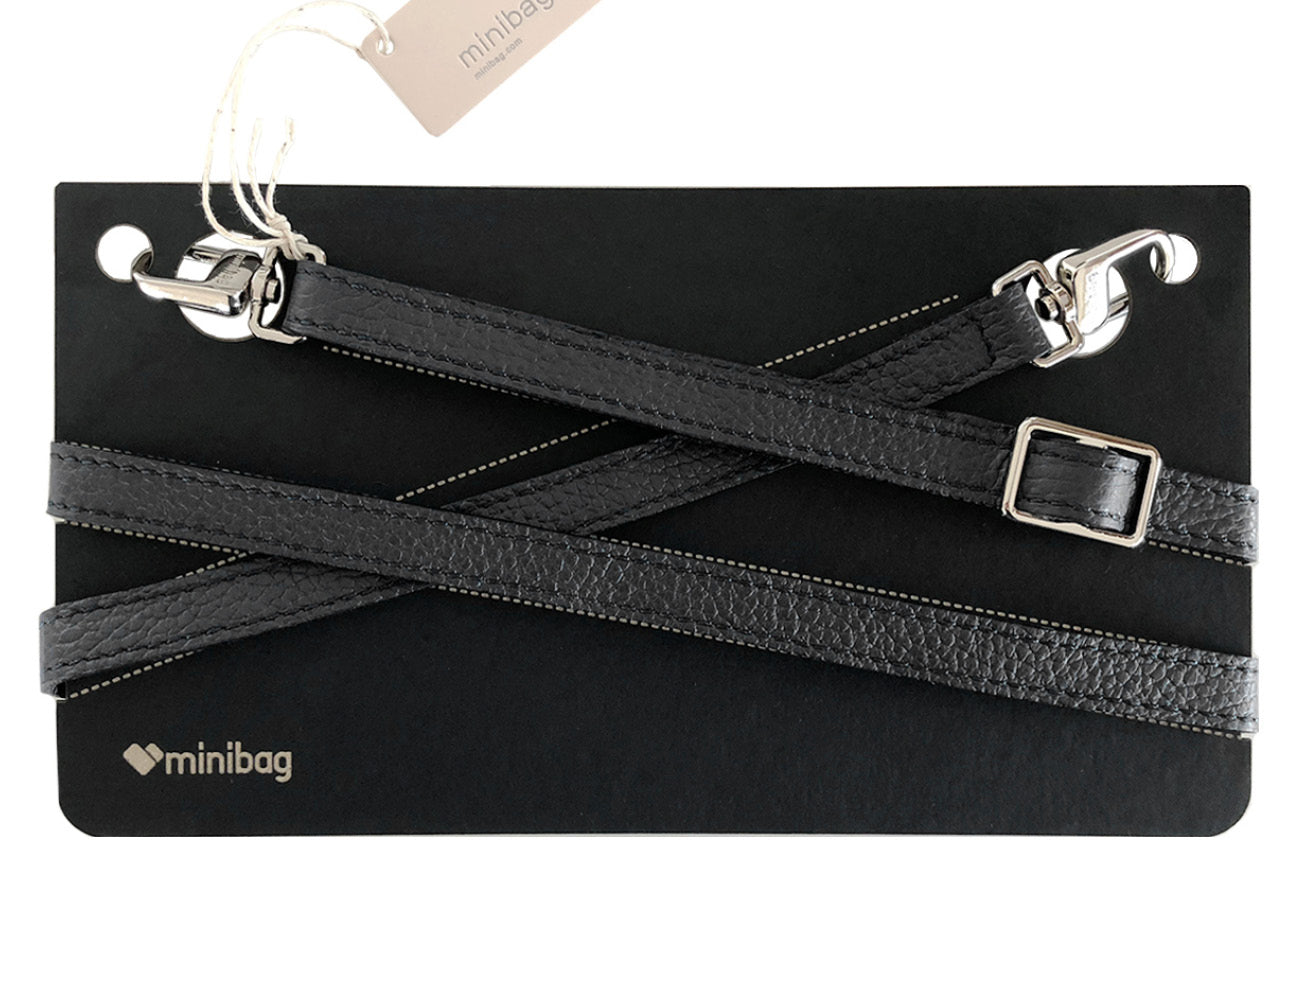 Minibag Ledergurt schwarz, minibag Strap schwarz, Ledergurt für Taschen schwarz, minibag Accessoires